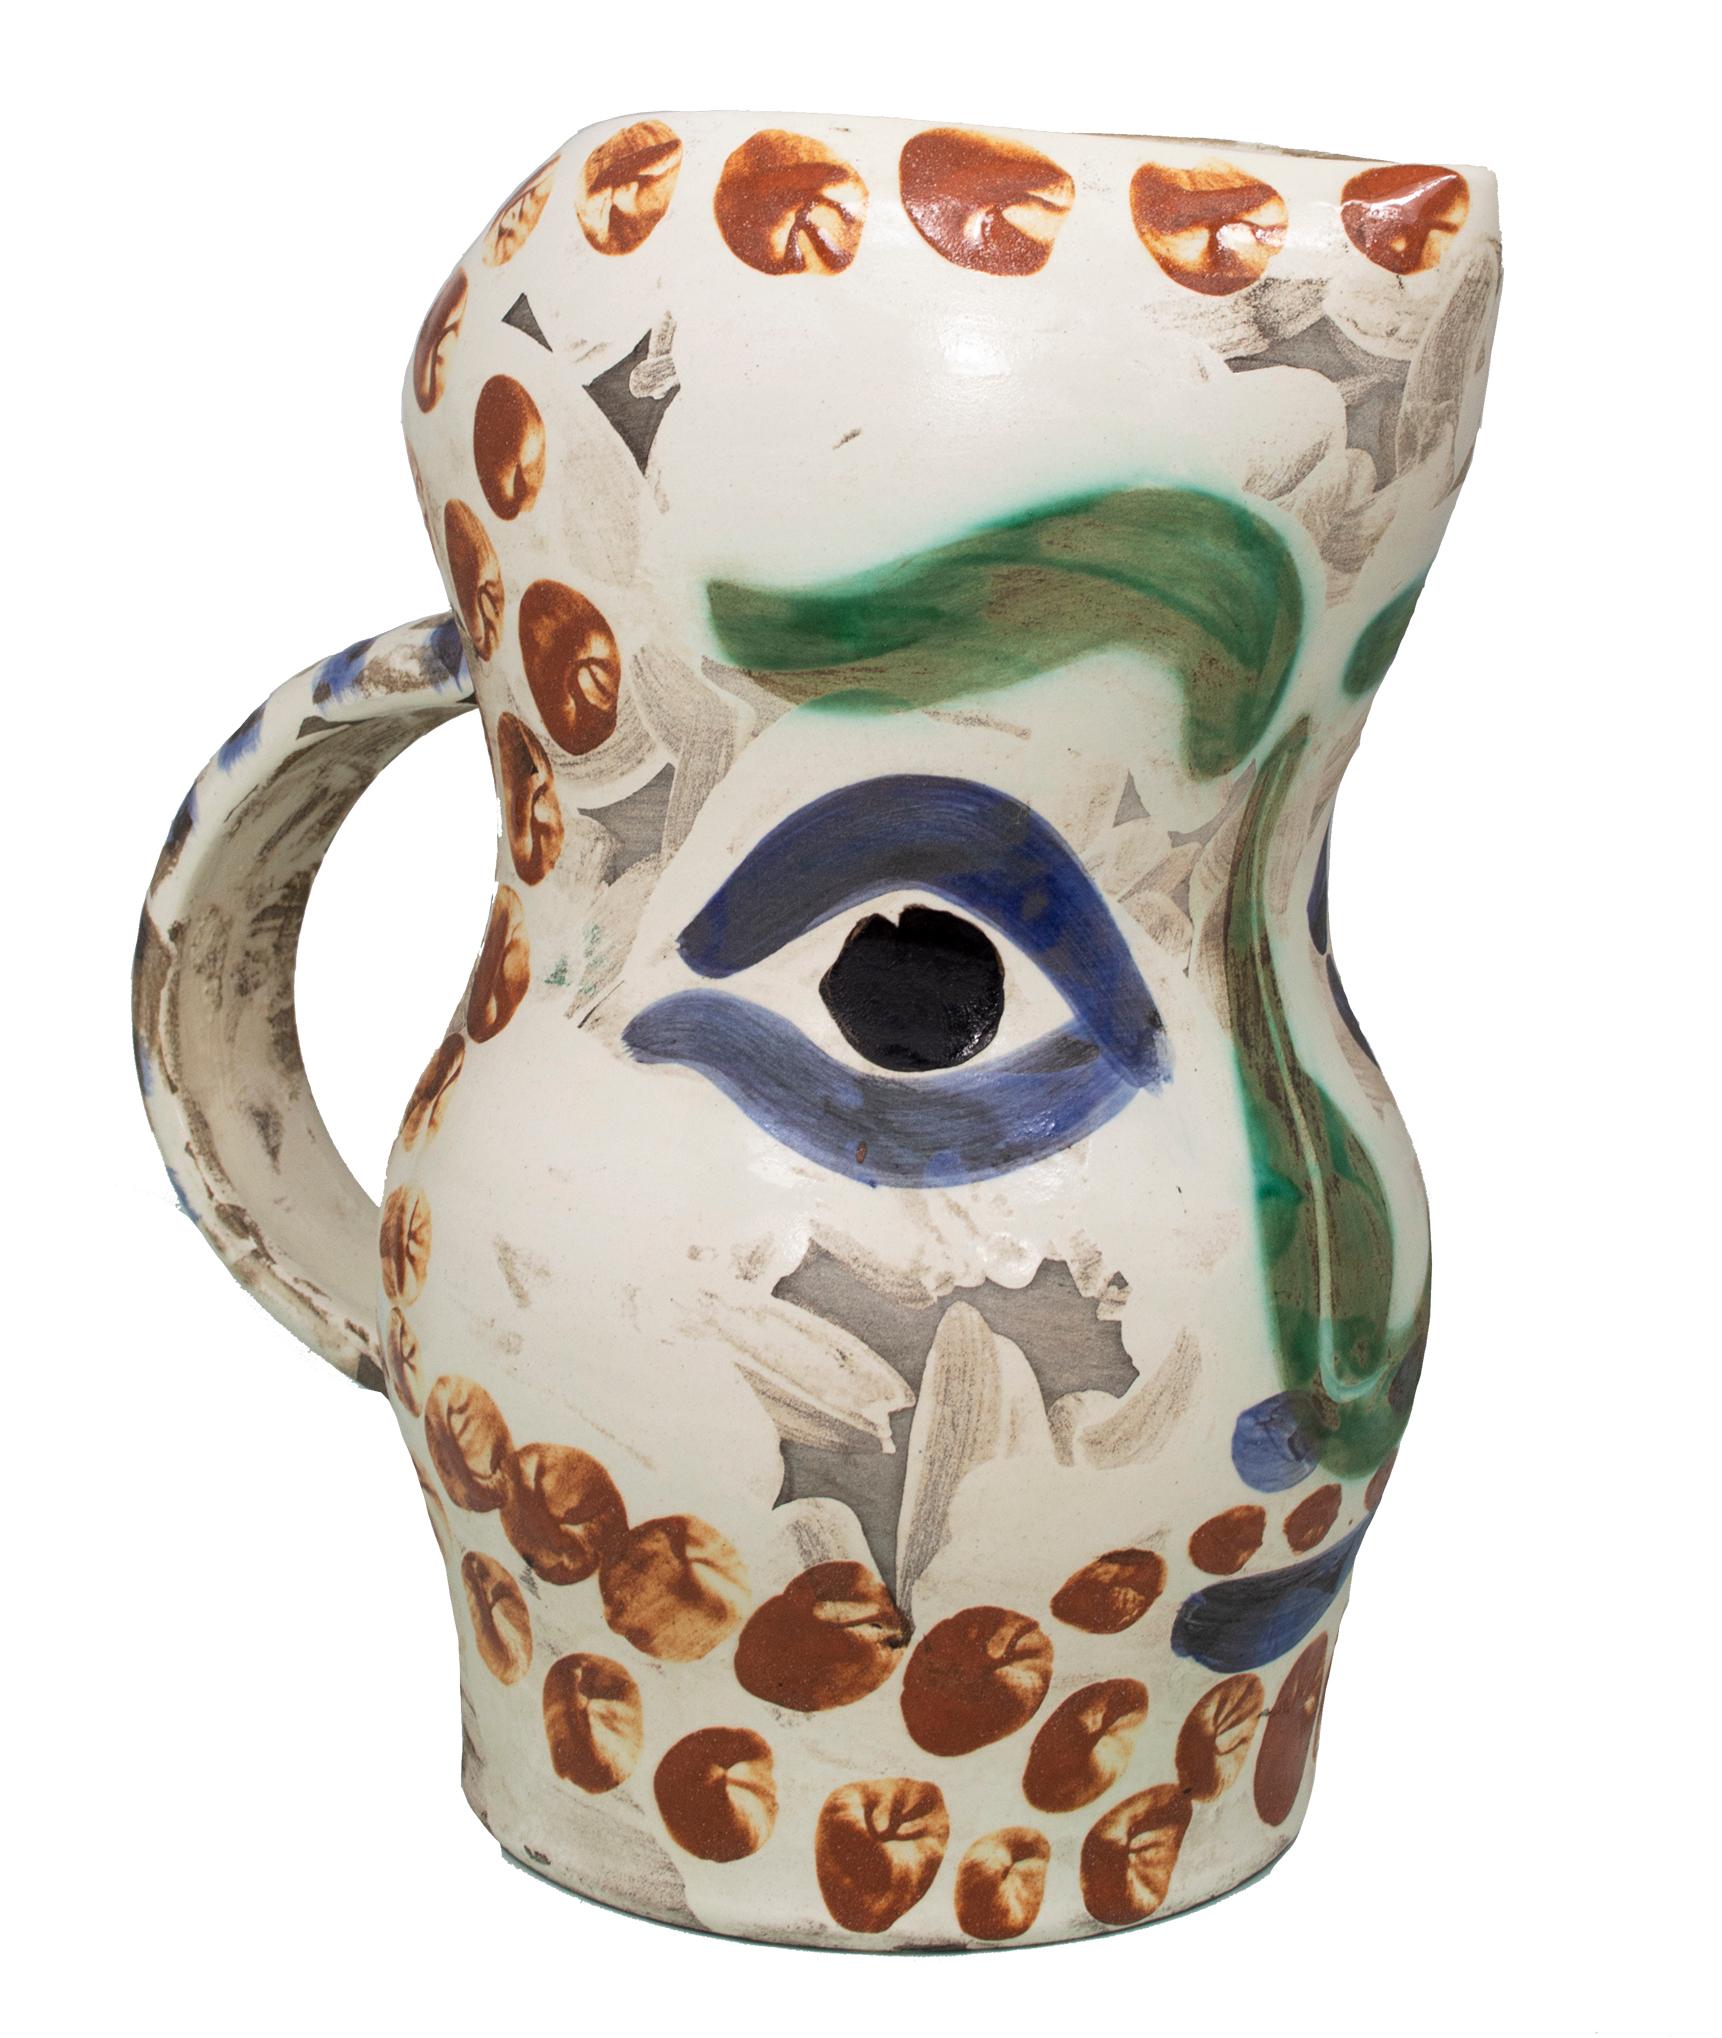 'Face with Points (Visage aux points)' Madoura ceramic pitcher, Edition Picasso - Cubist Sculpture by Pablo Picasso